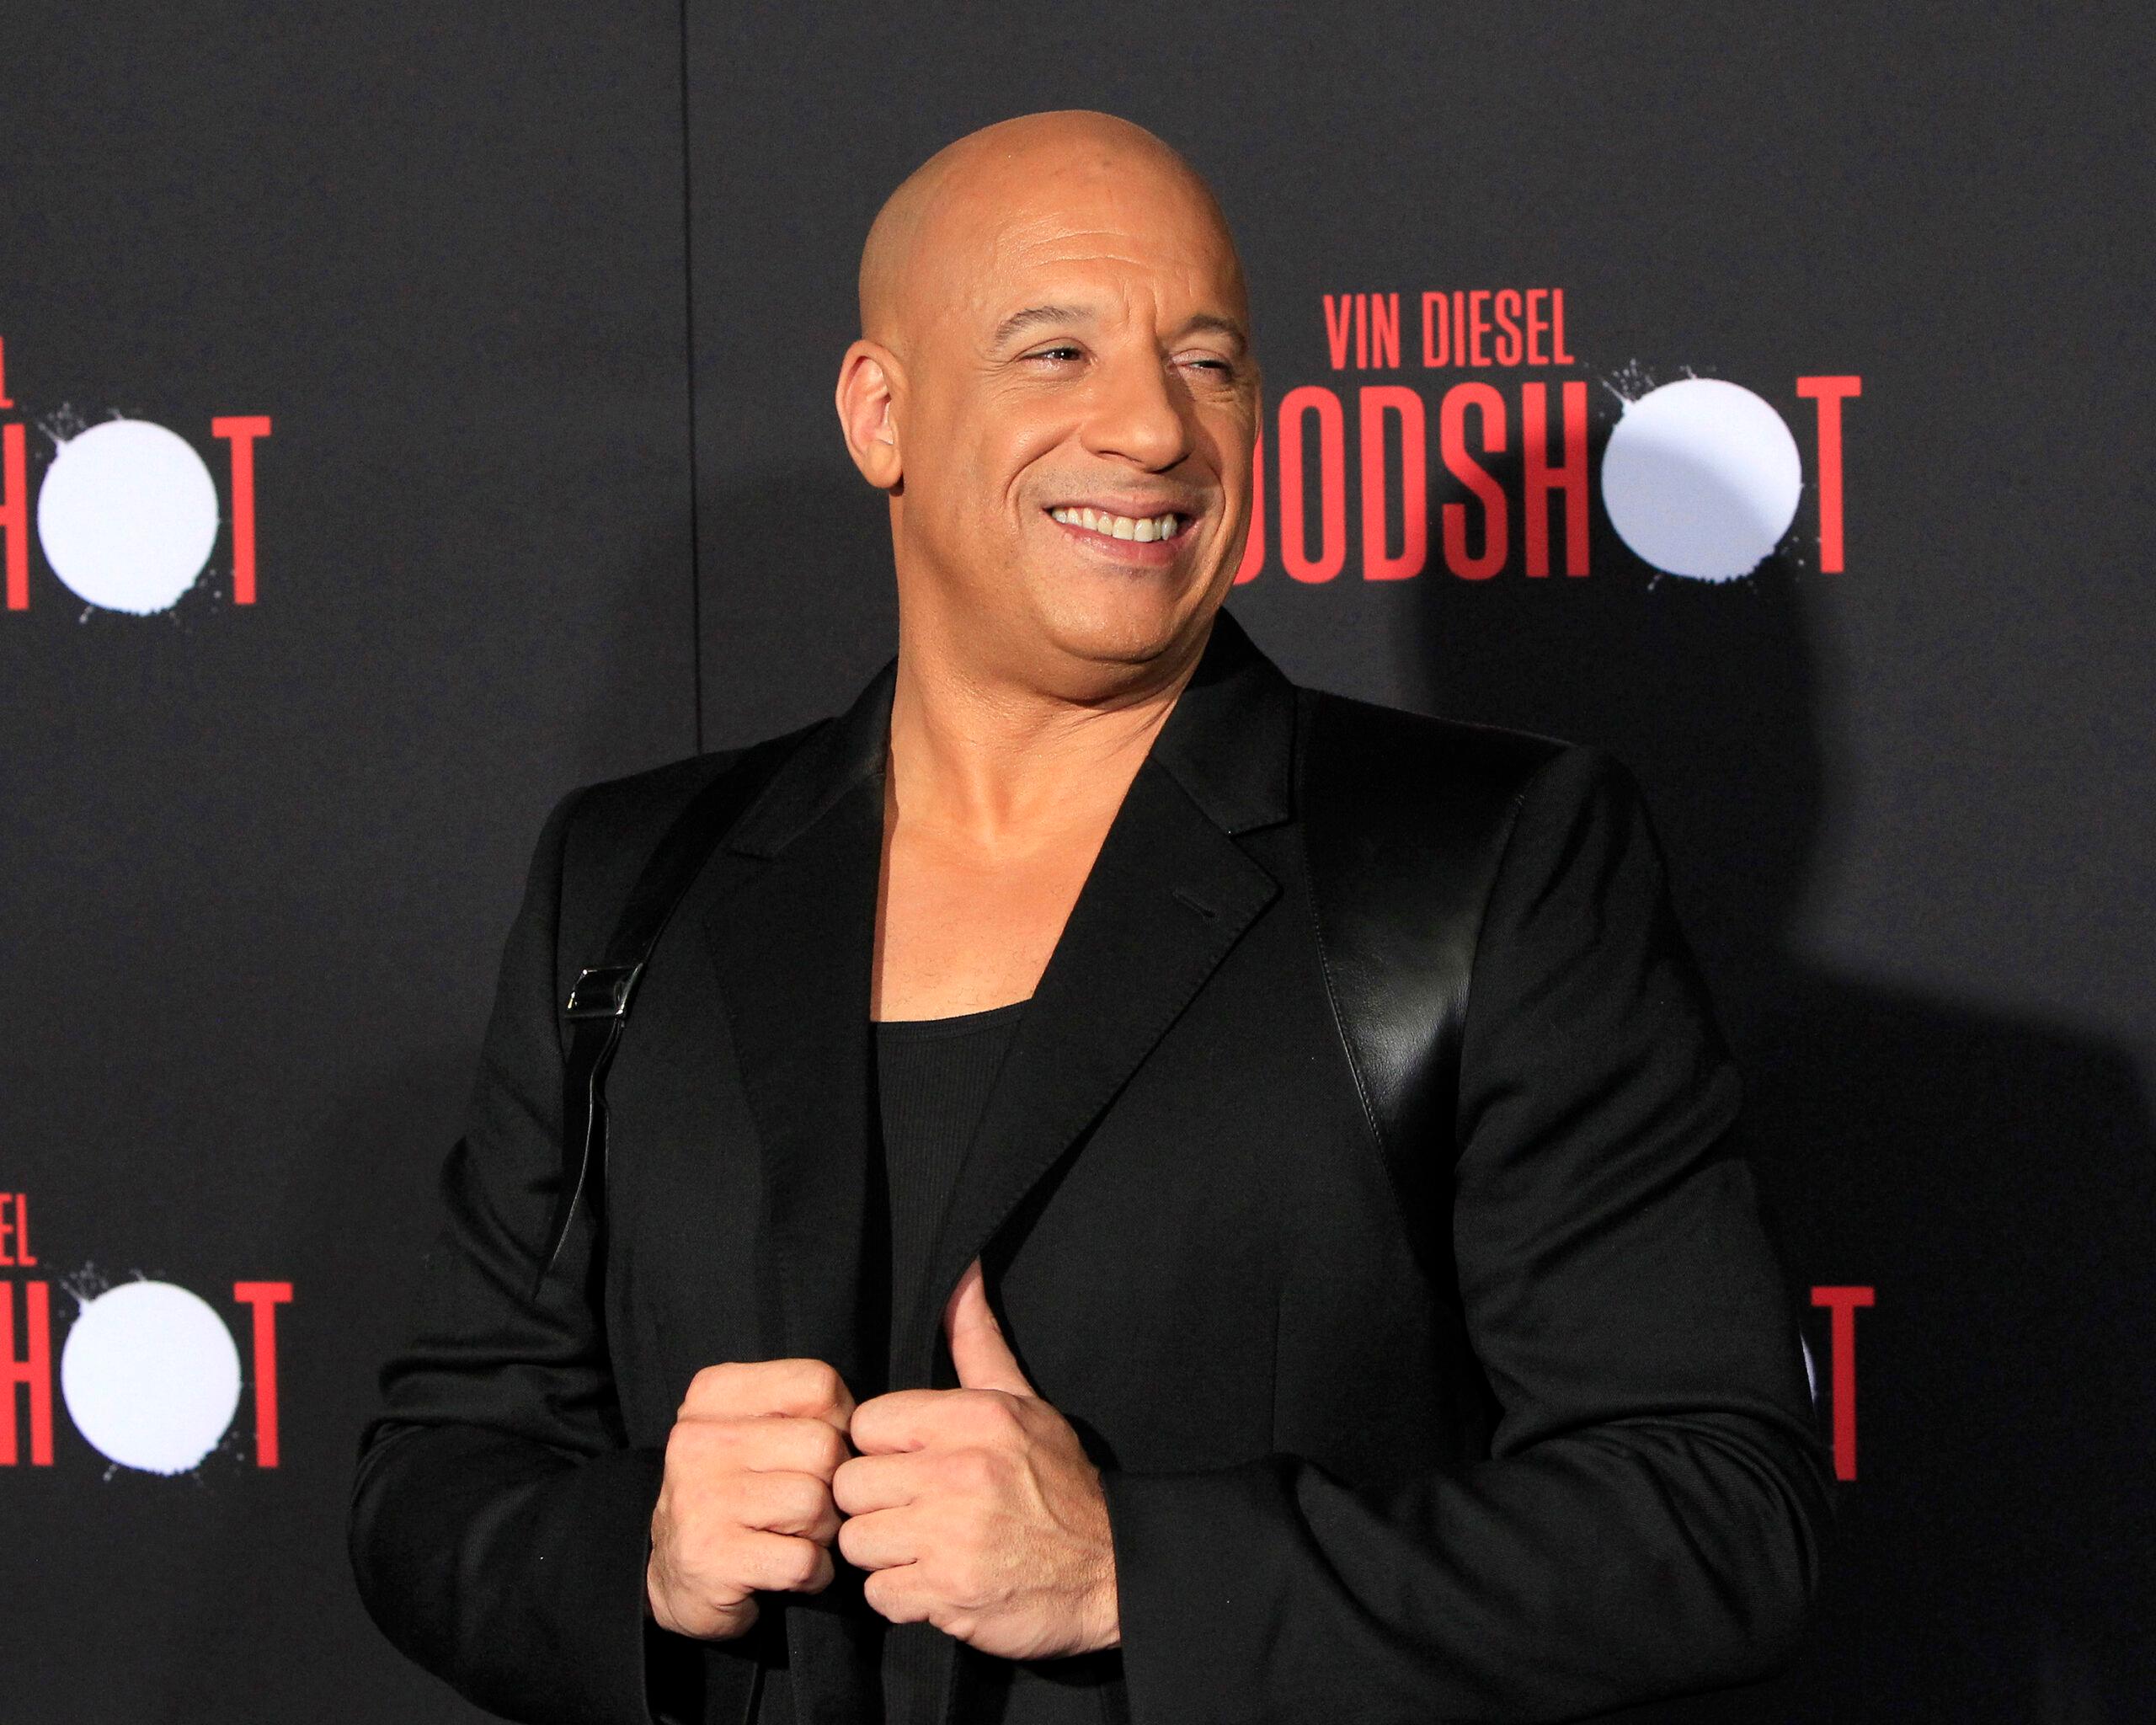 Vin Diesel at "Bloodshot" Premiere - Westwood